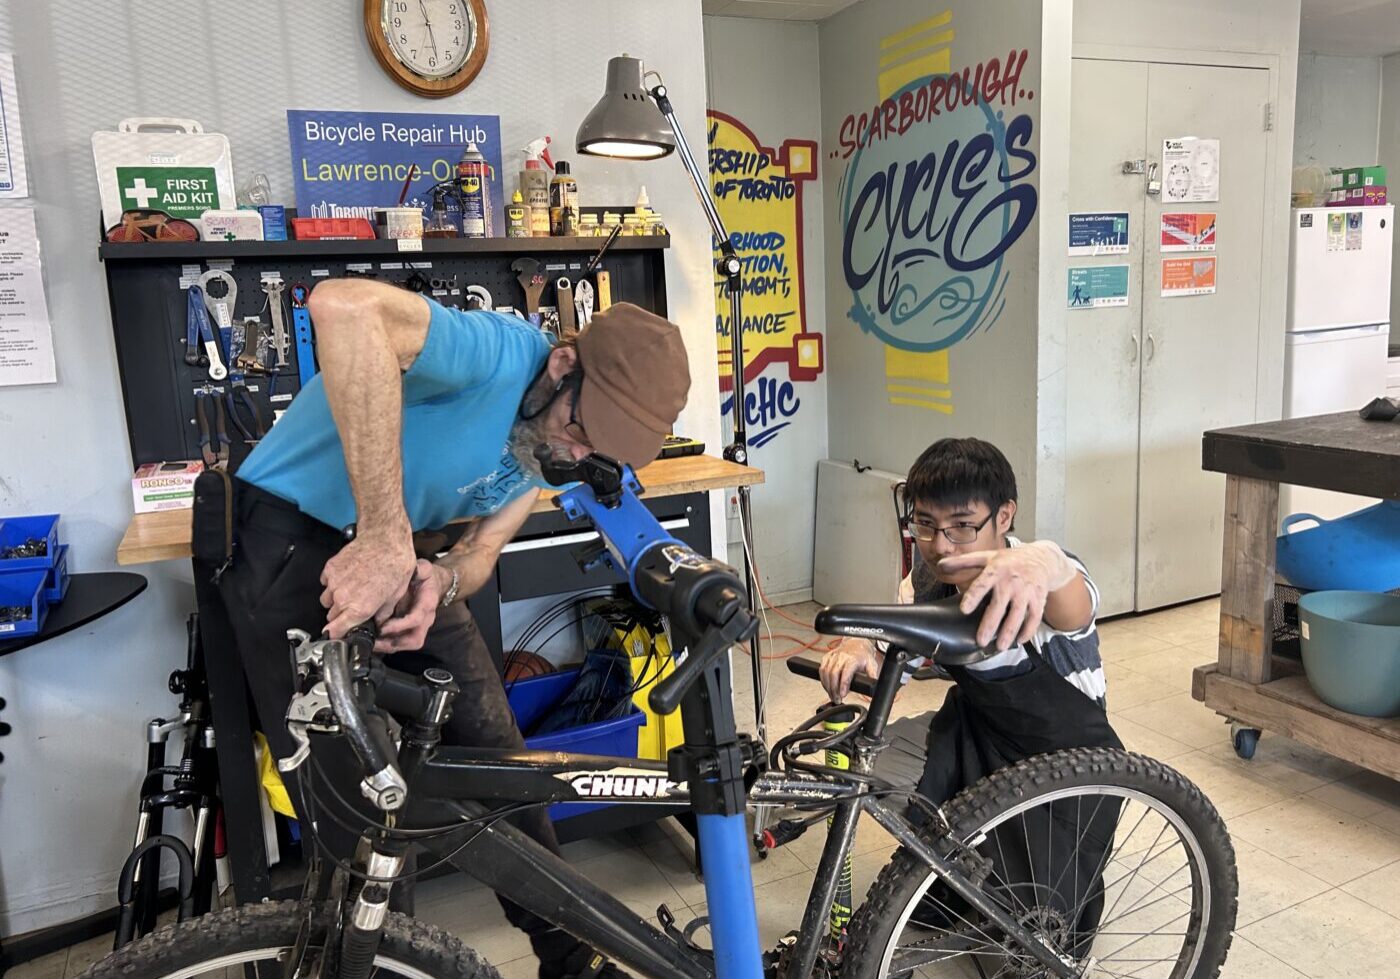 Scarborough Cycles volunteers repair a bike in the Lawrence-Orton bike hub.